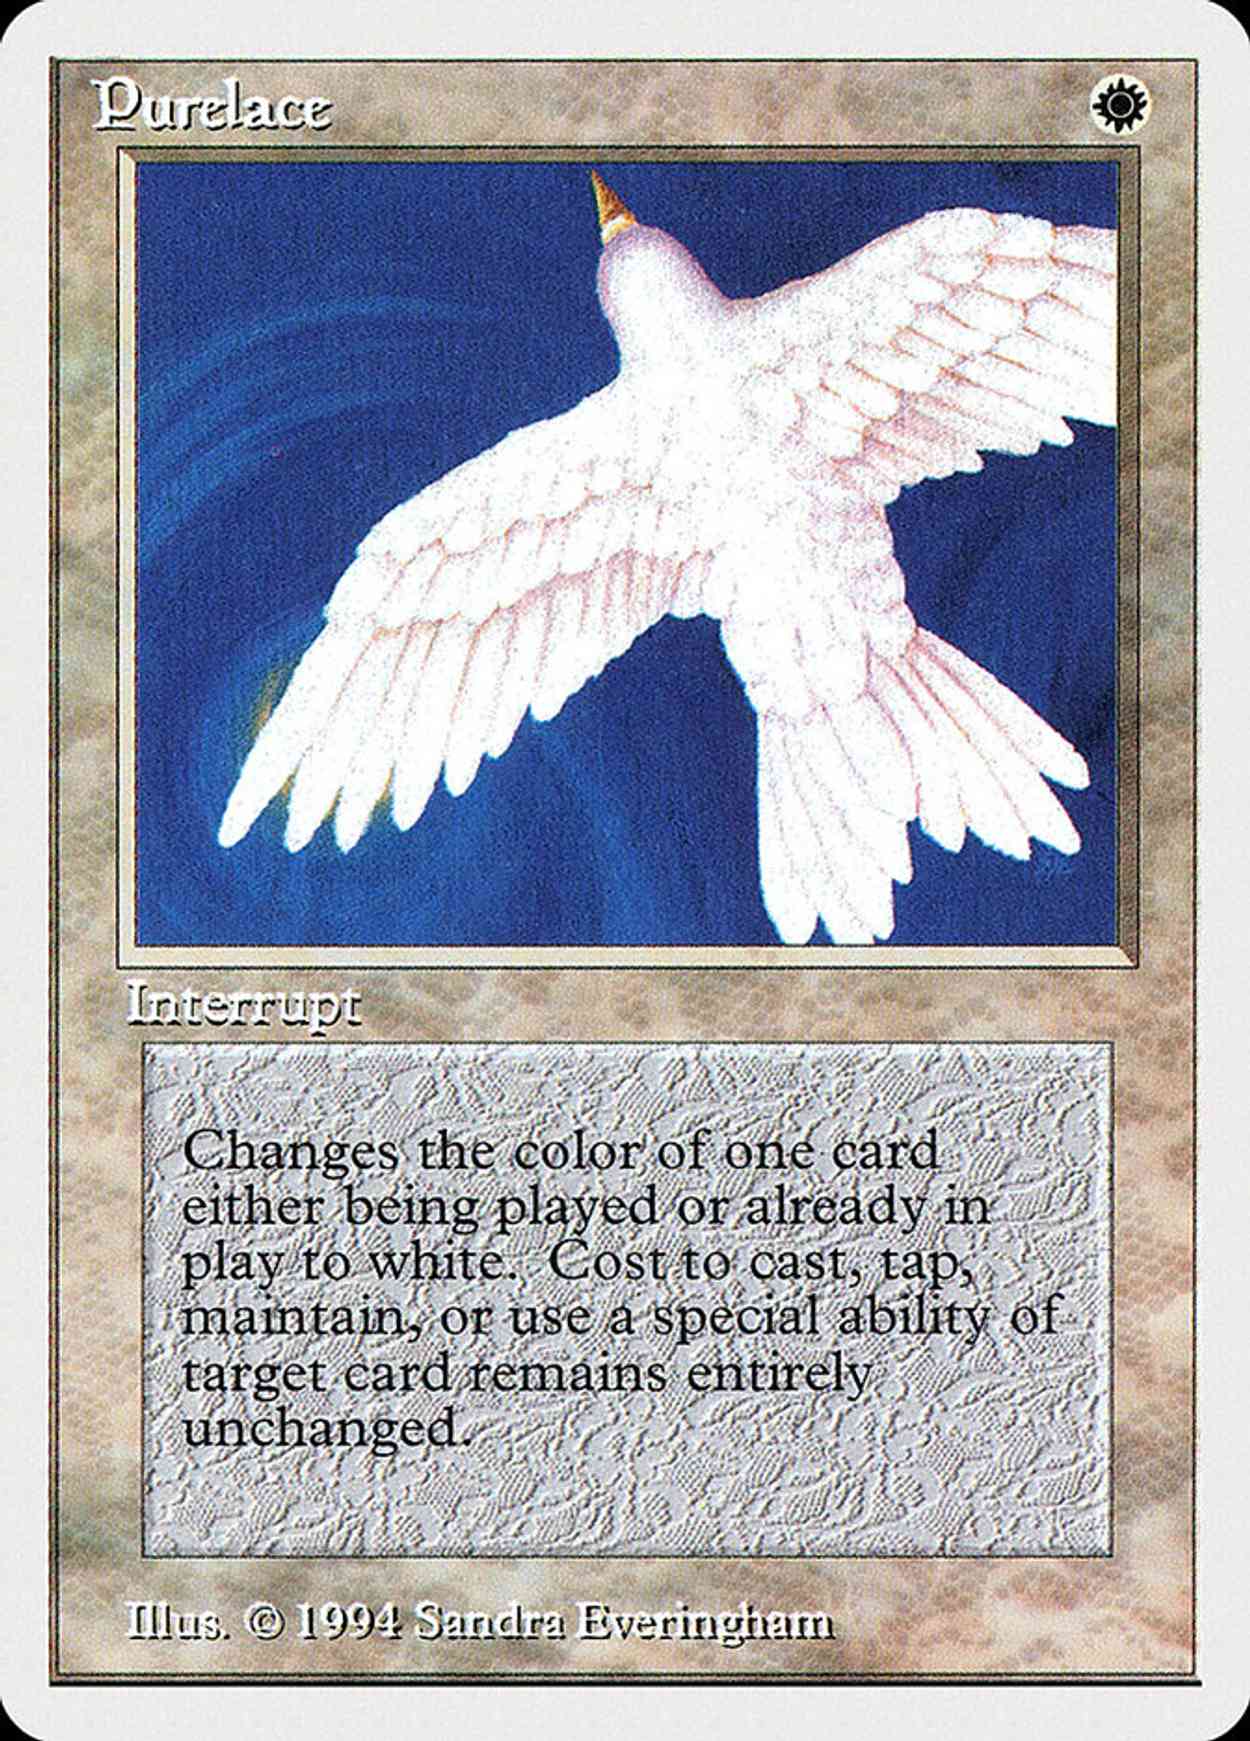 Purelace magic card front